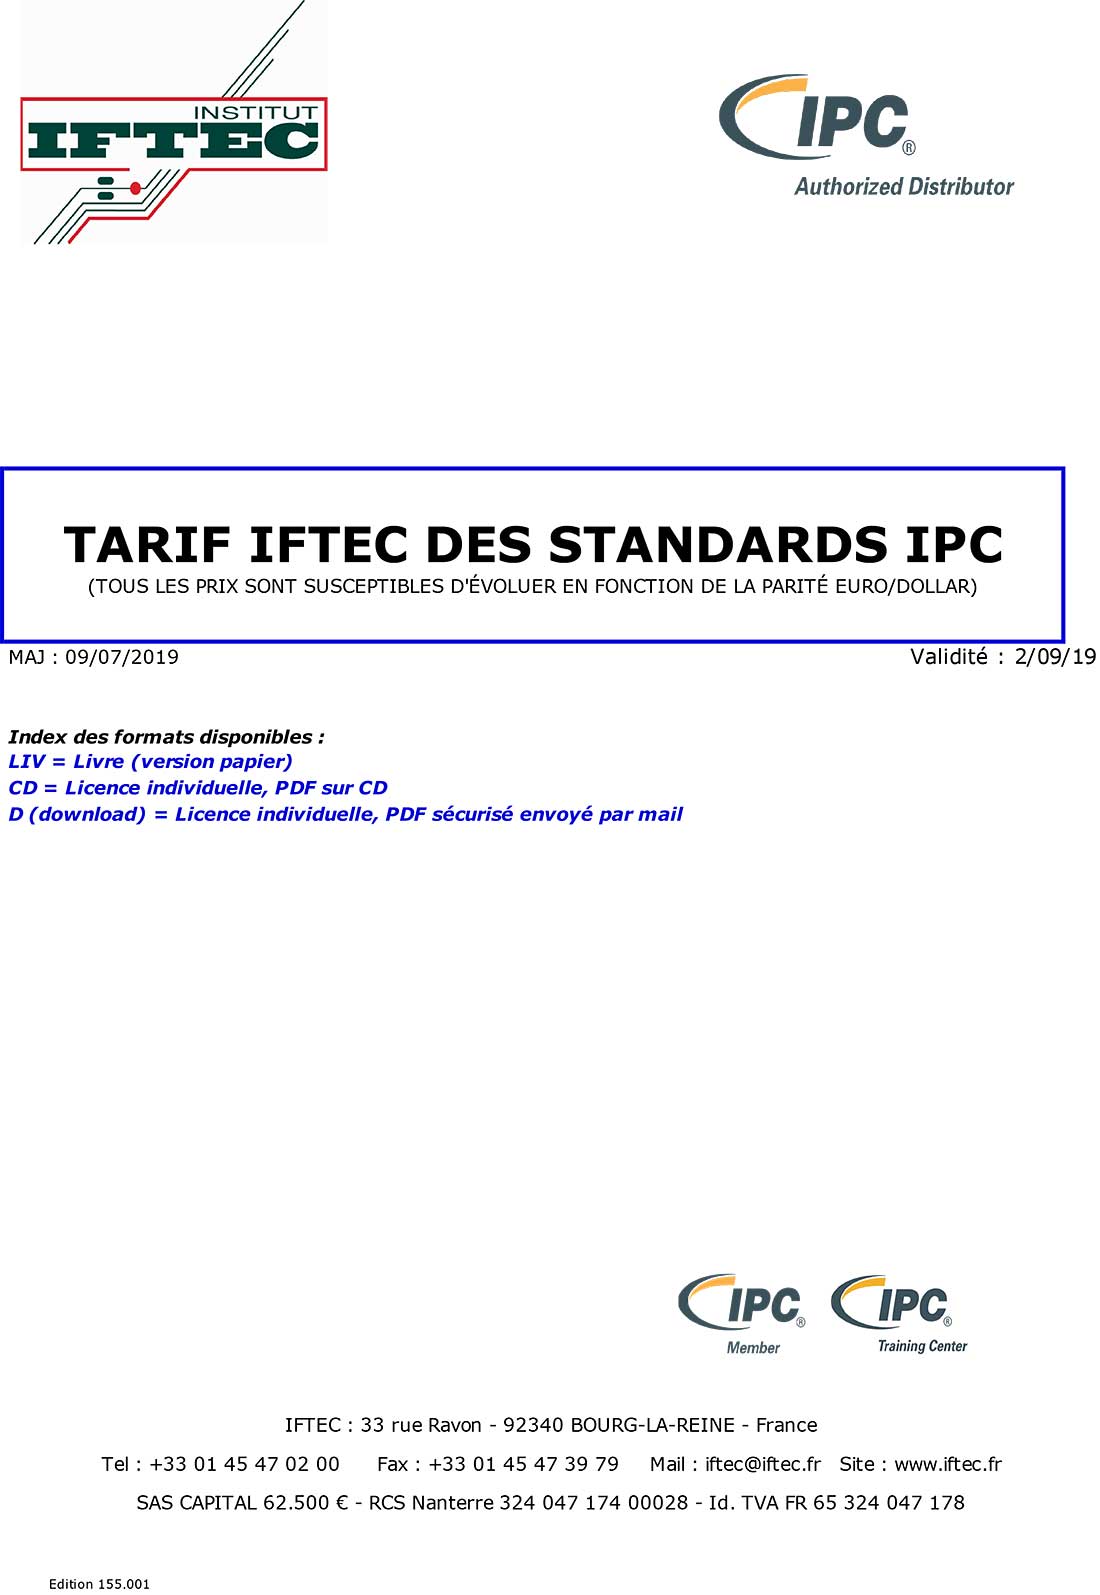 TARIF-CLIENTS-IPC-9-juill-au-2-sept-2019-1